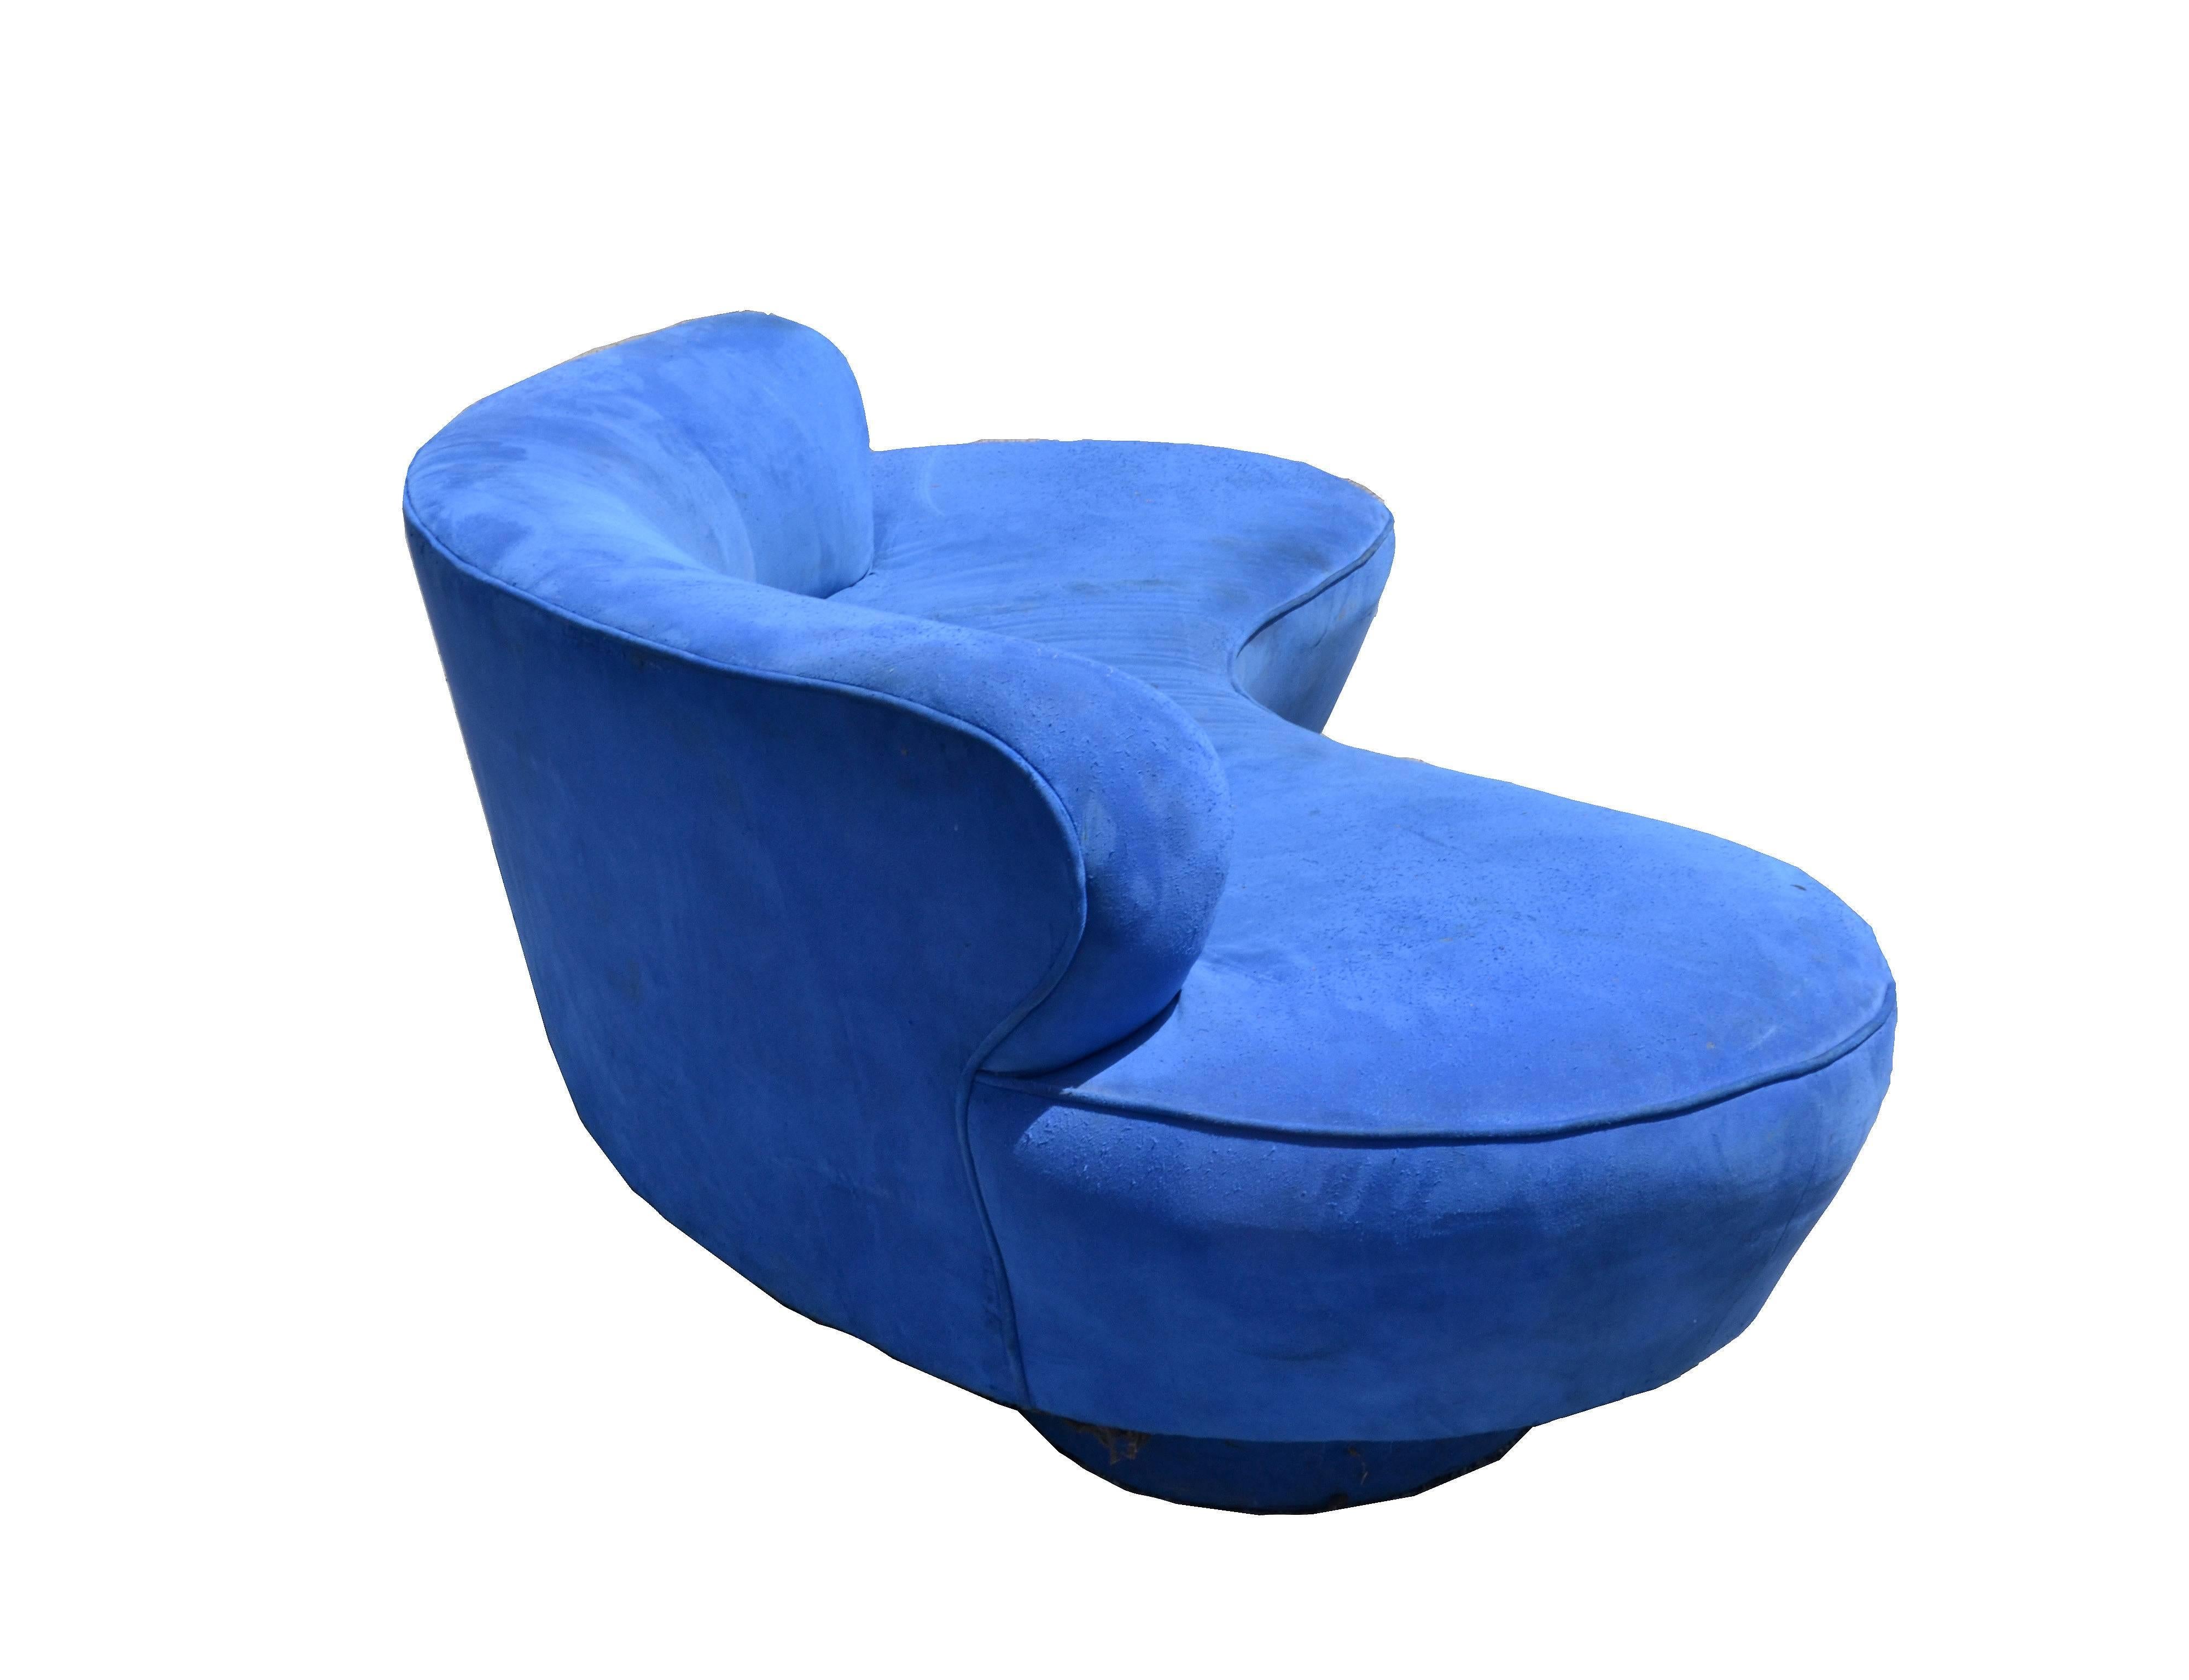 American Vintage Vladimir Kagan Serpentine Sofa Blue Microfiber by Directional Furniture 